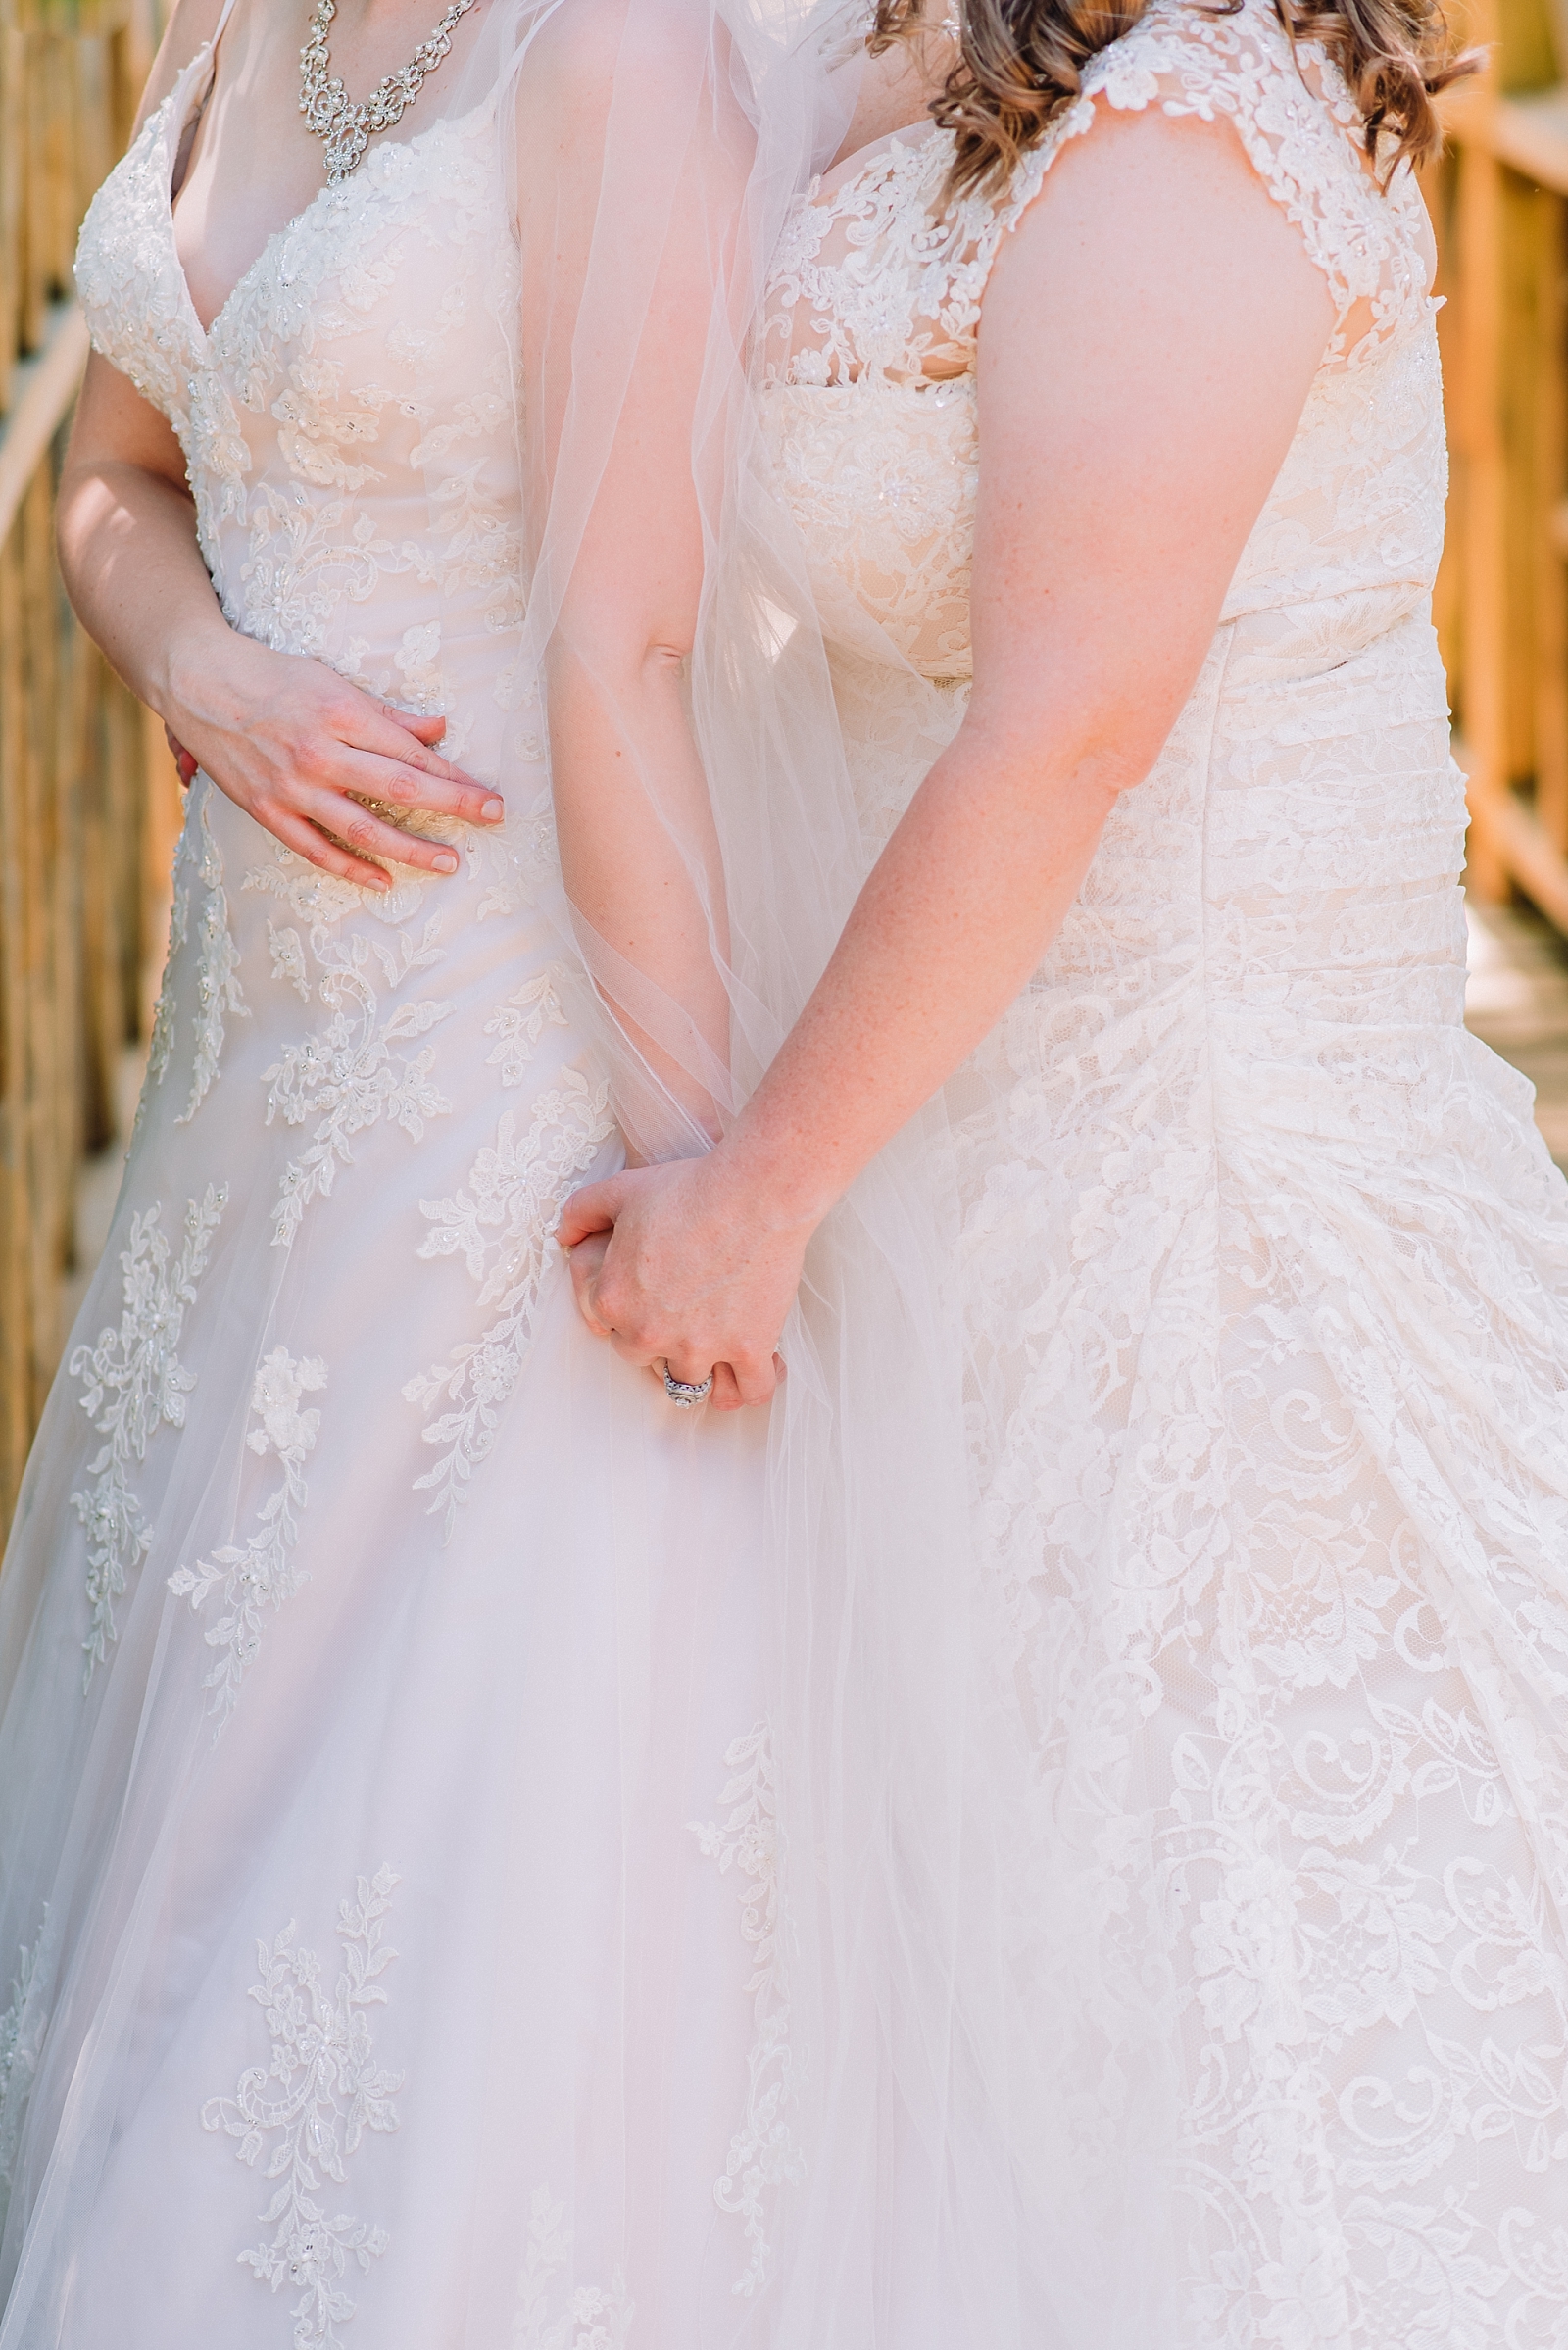 brides holding hands